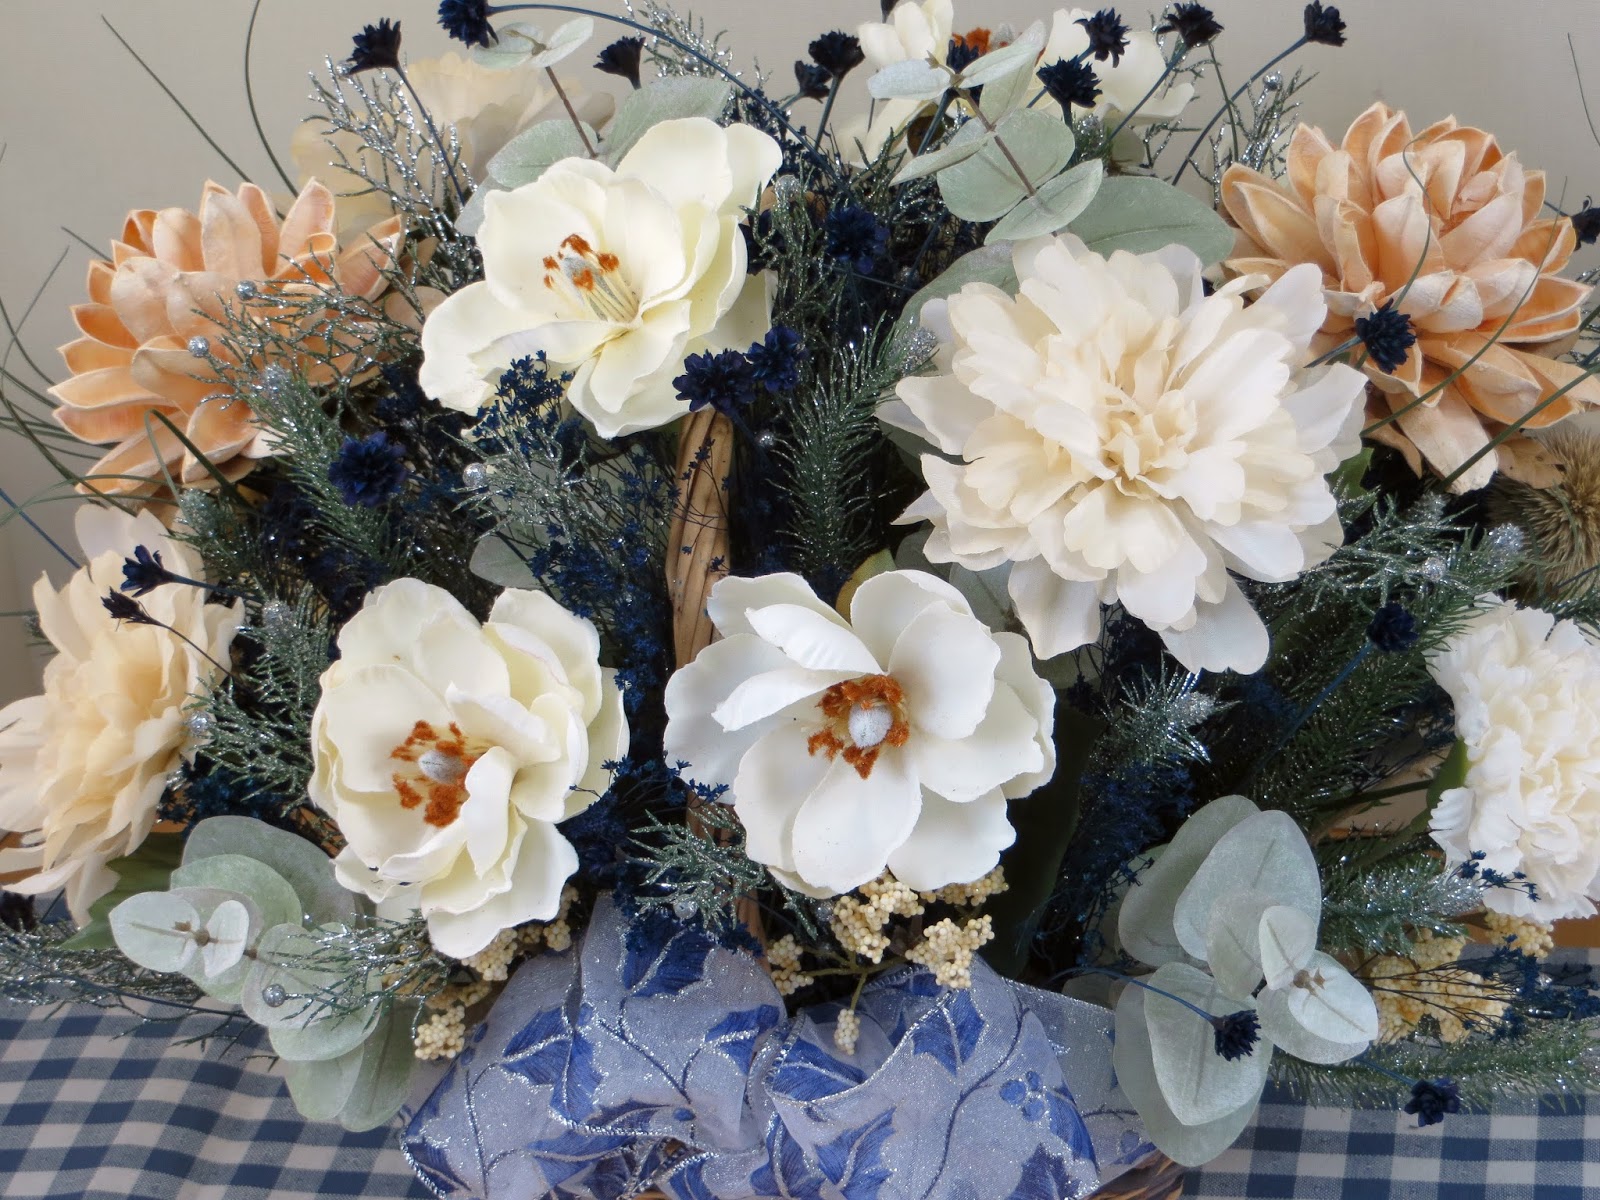 Linda's Blog: One Of My Favorite Floral Arrangements